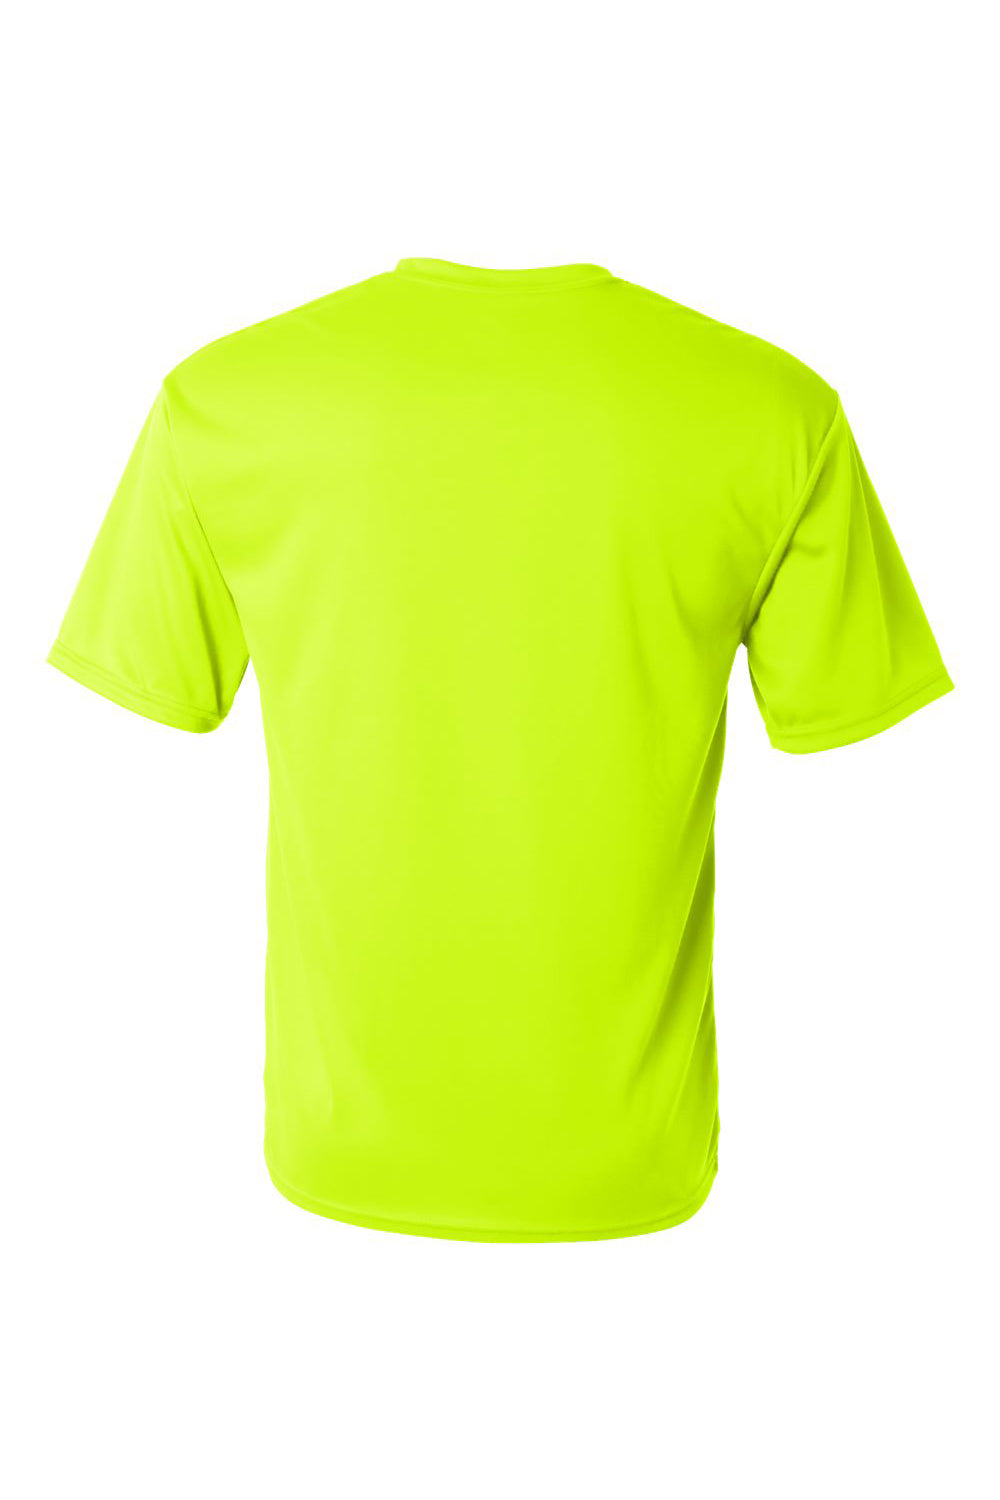 C2 Sport 5100 Mens Performance Moisture Wicking Short Sleeve Crewneck T-Shirt Safety Yellow Flat Back